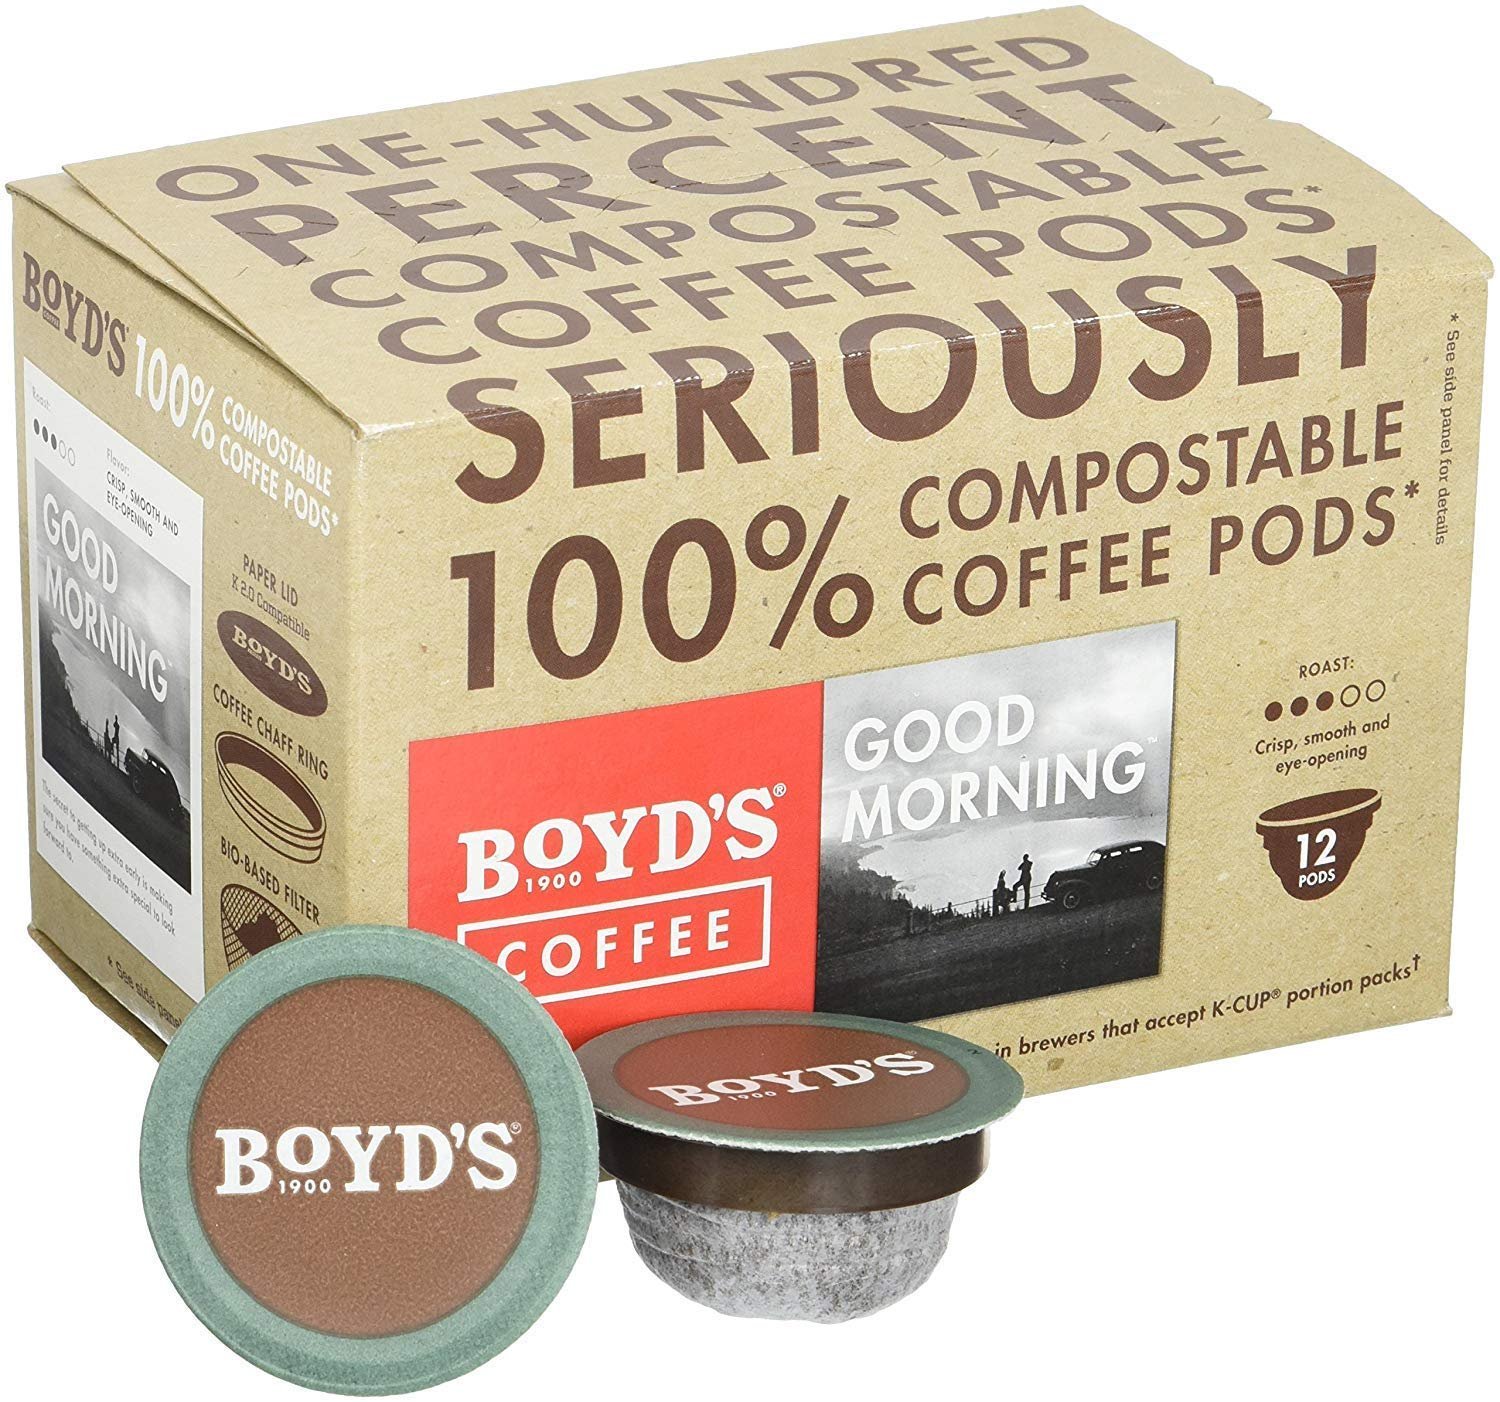 Boyd's Good Morning Coffee - Medium Roast